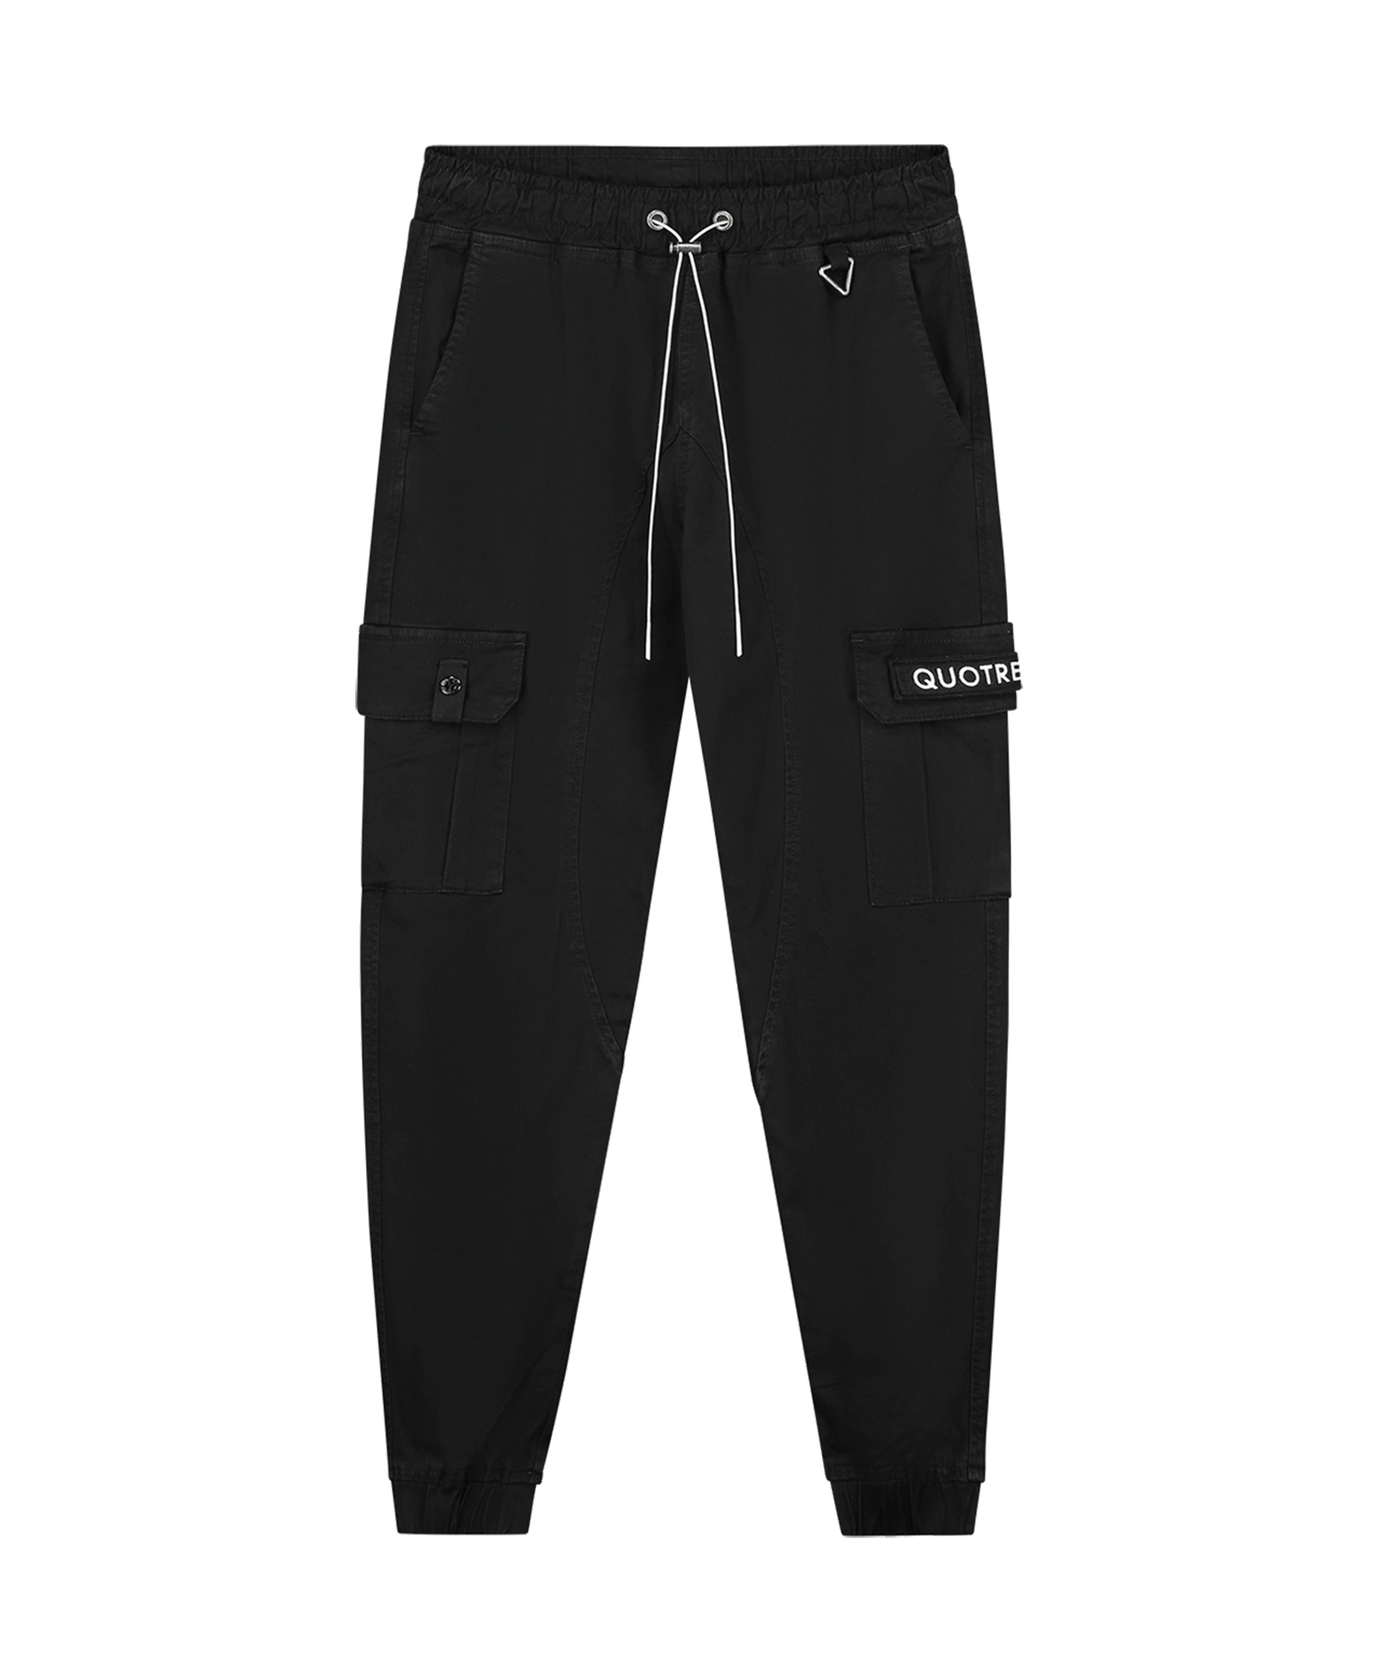 Quotrell - Brockton - Cargo Pants - Black/white